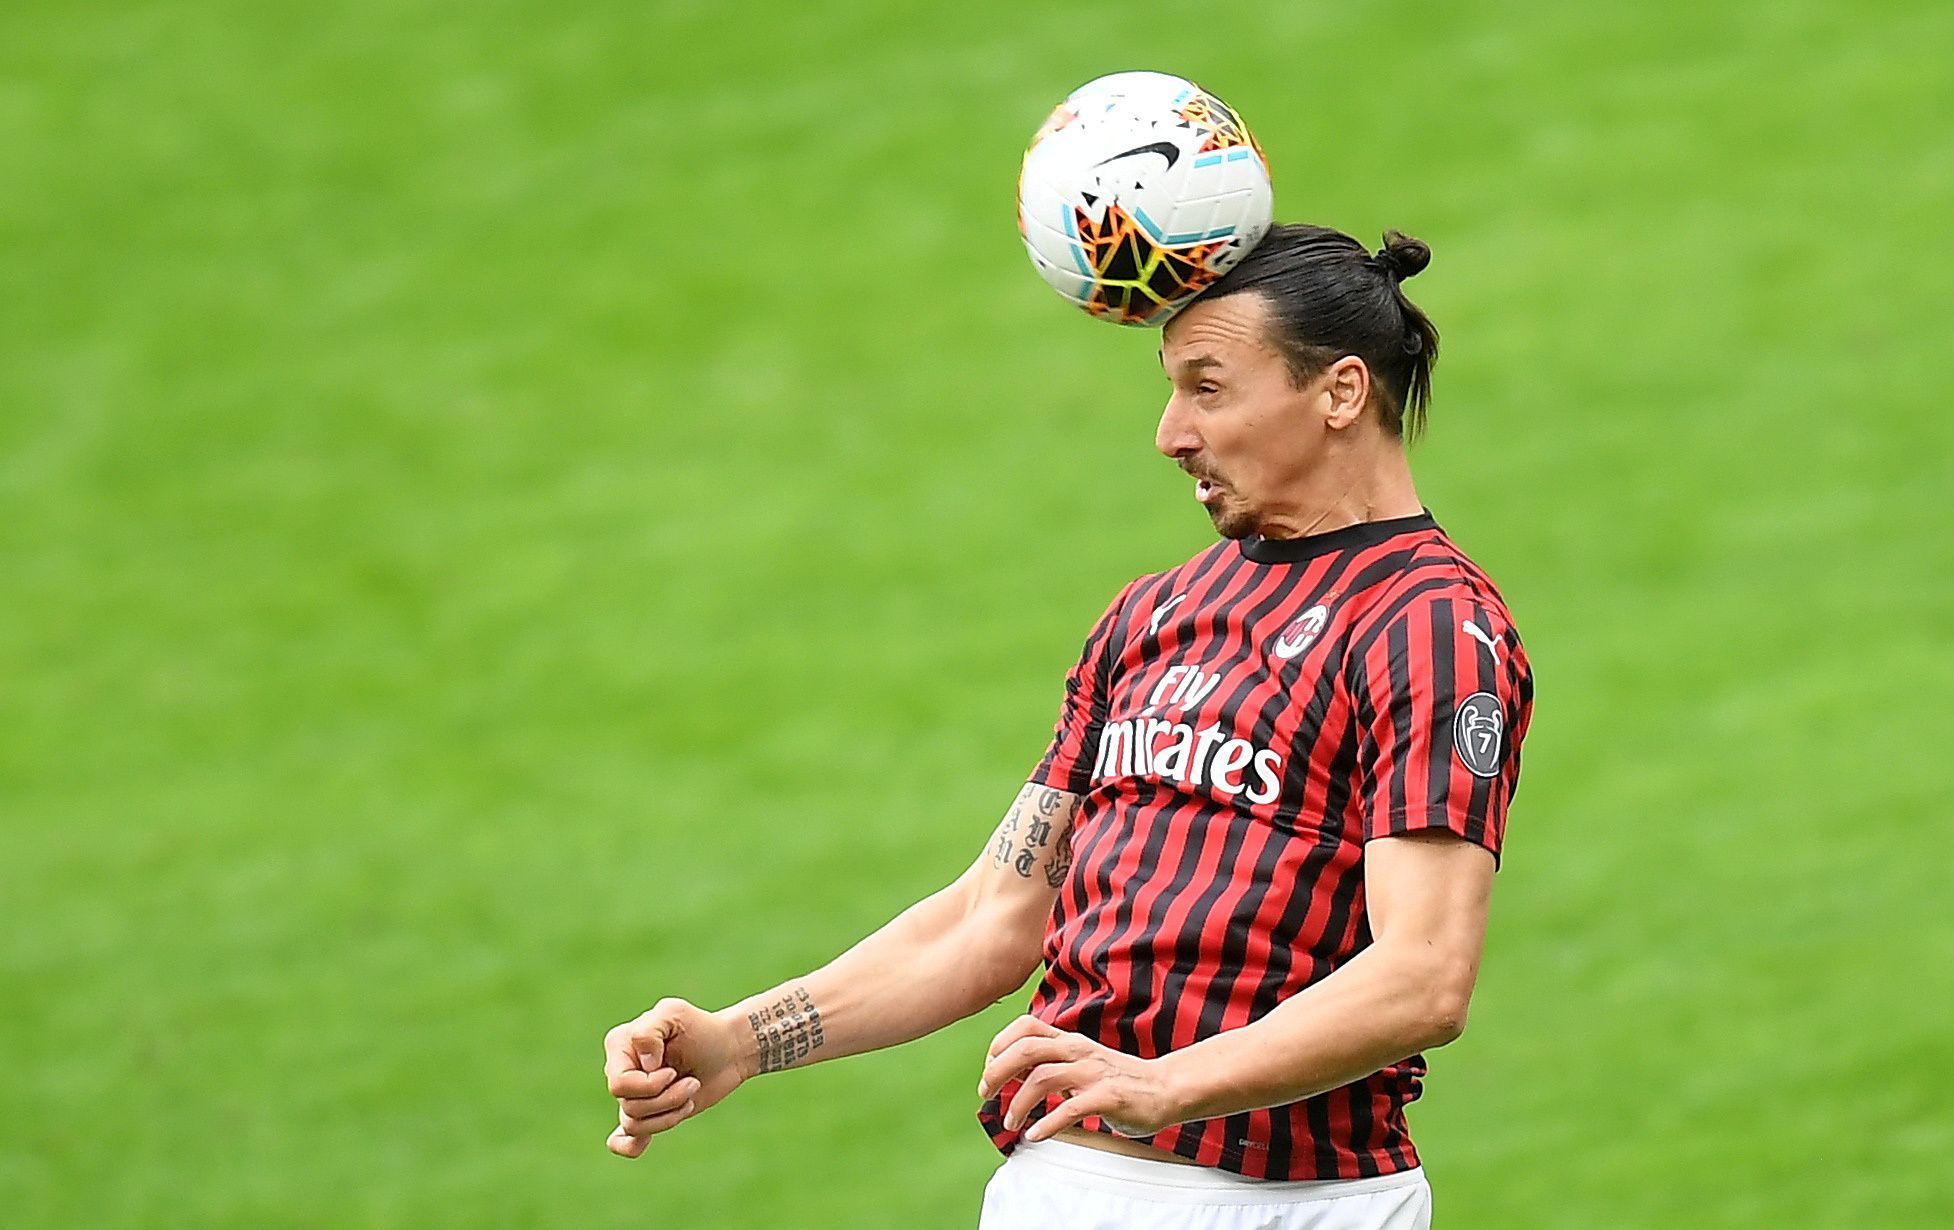 Serie A - AC Milan v Genoa, Zlatan Ibrahimovic